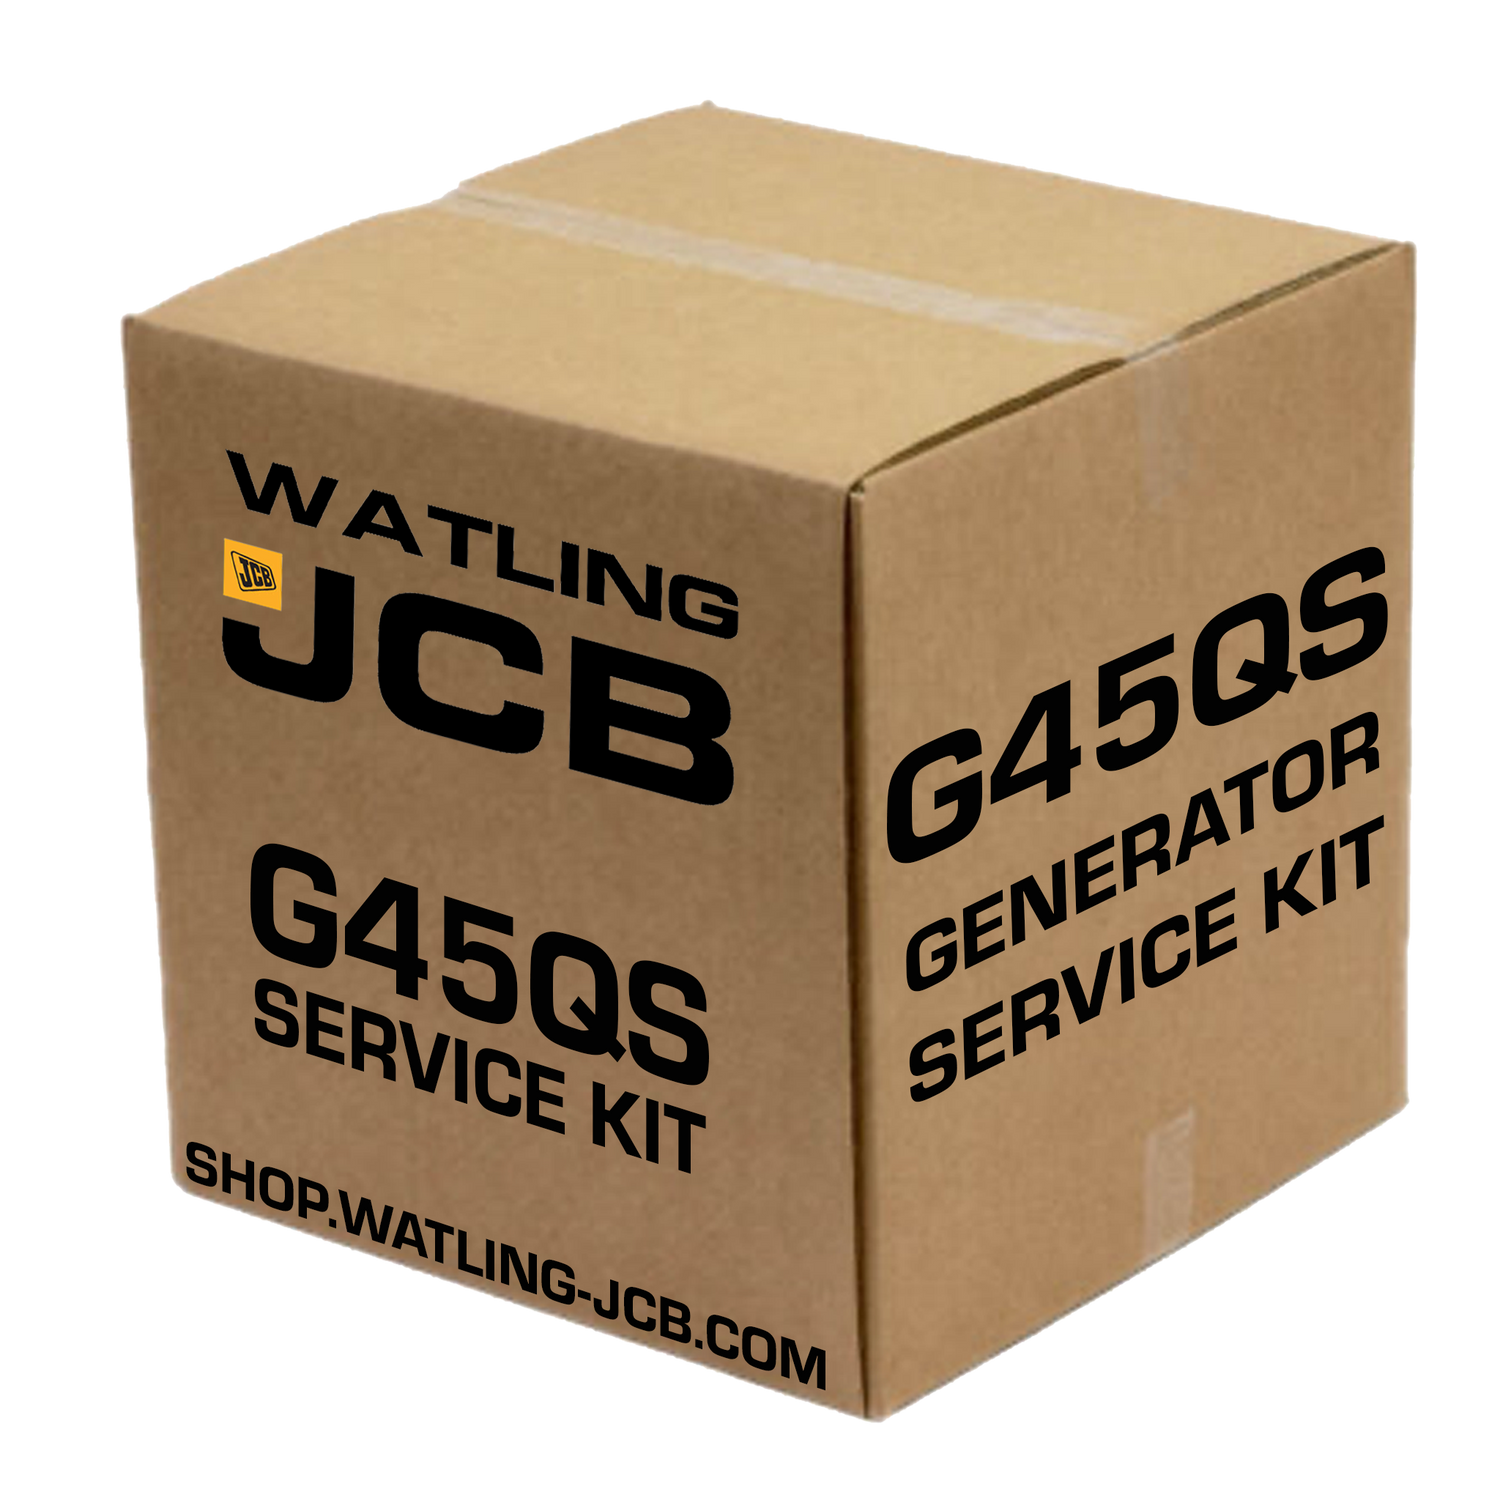 JCB G45QS Service Kits